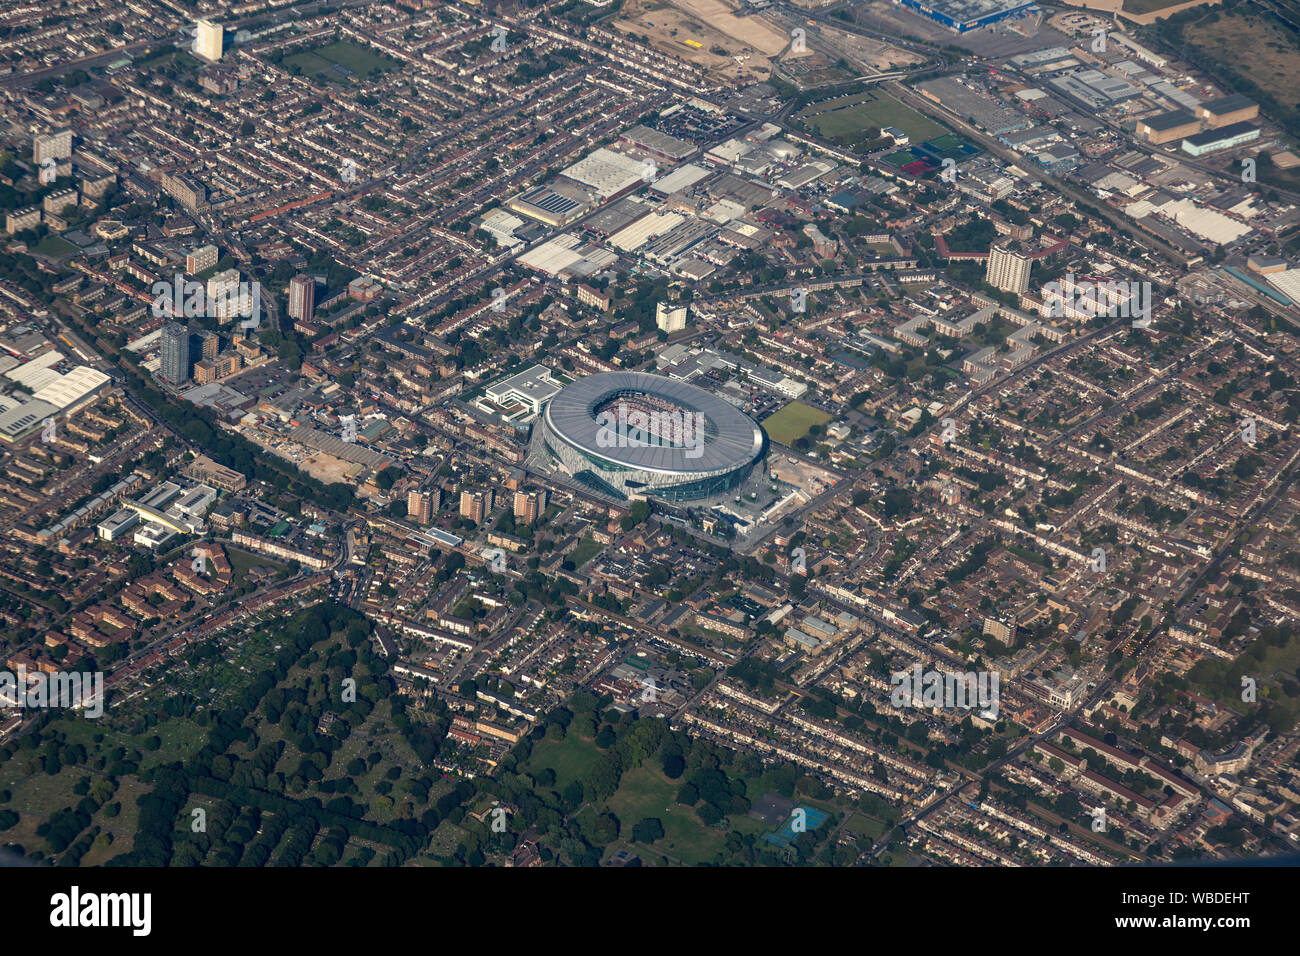 Aerial view of the Tottenham Hotspur Stadium Football Ground in North London, England. Stock Photo